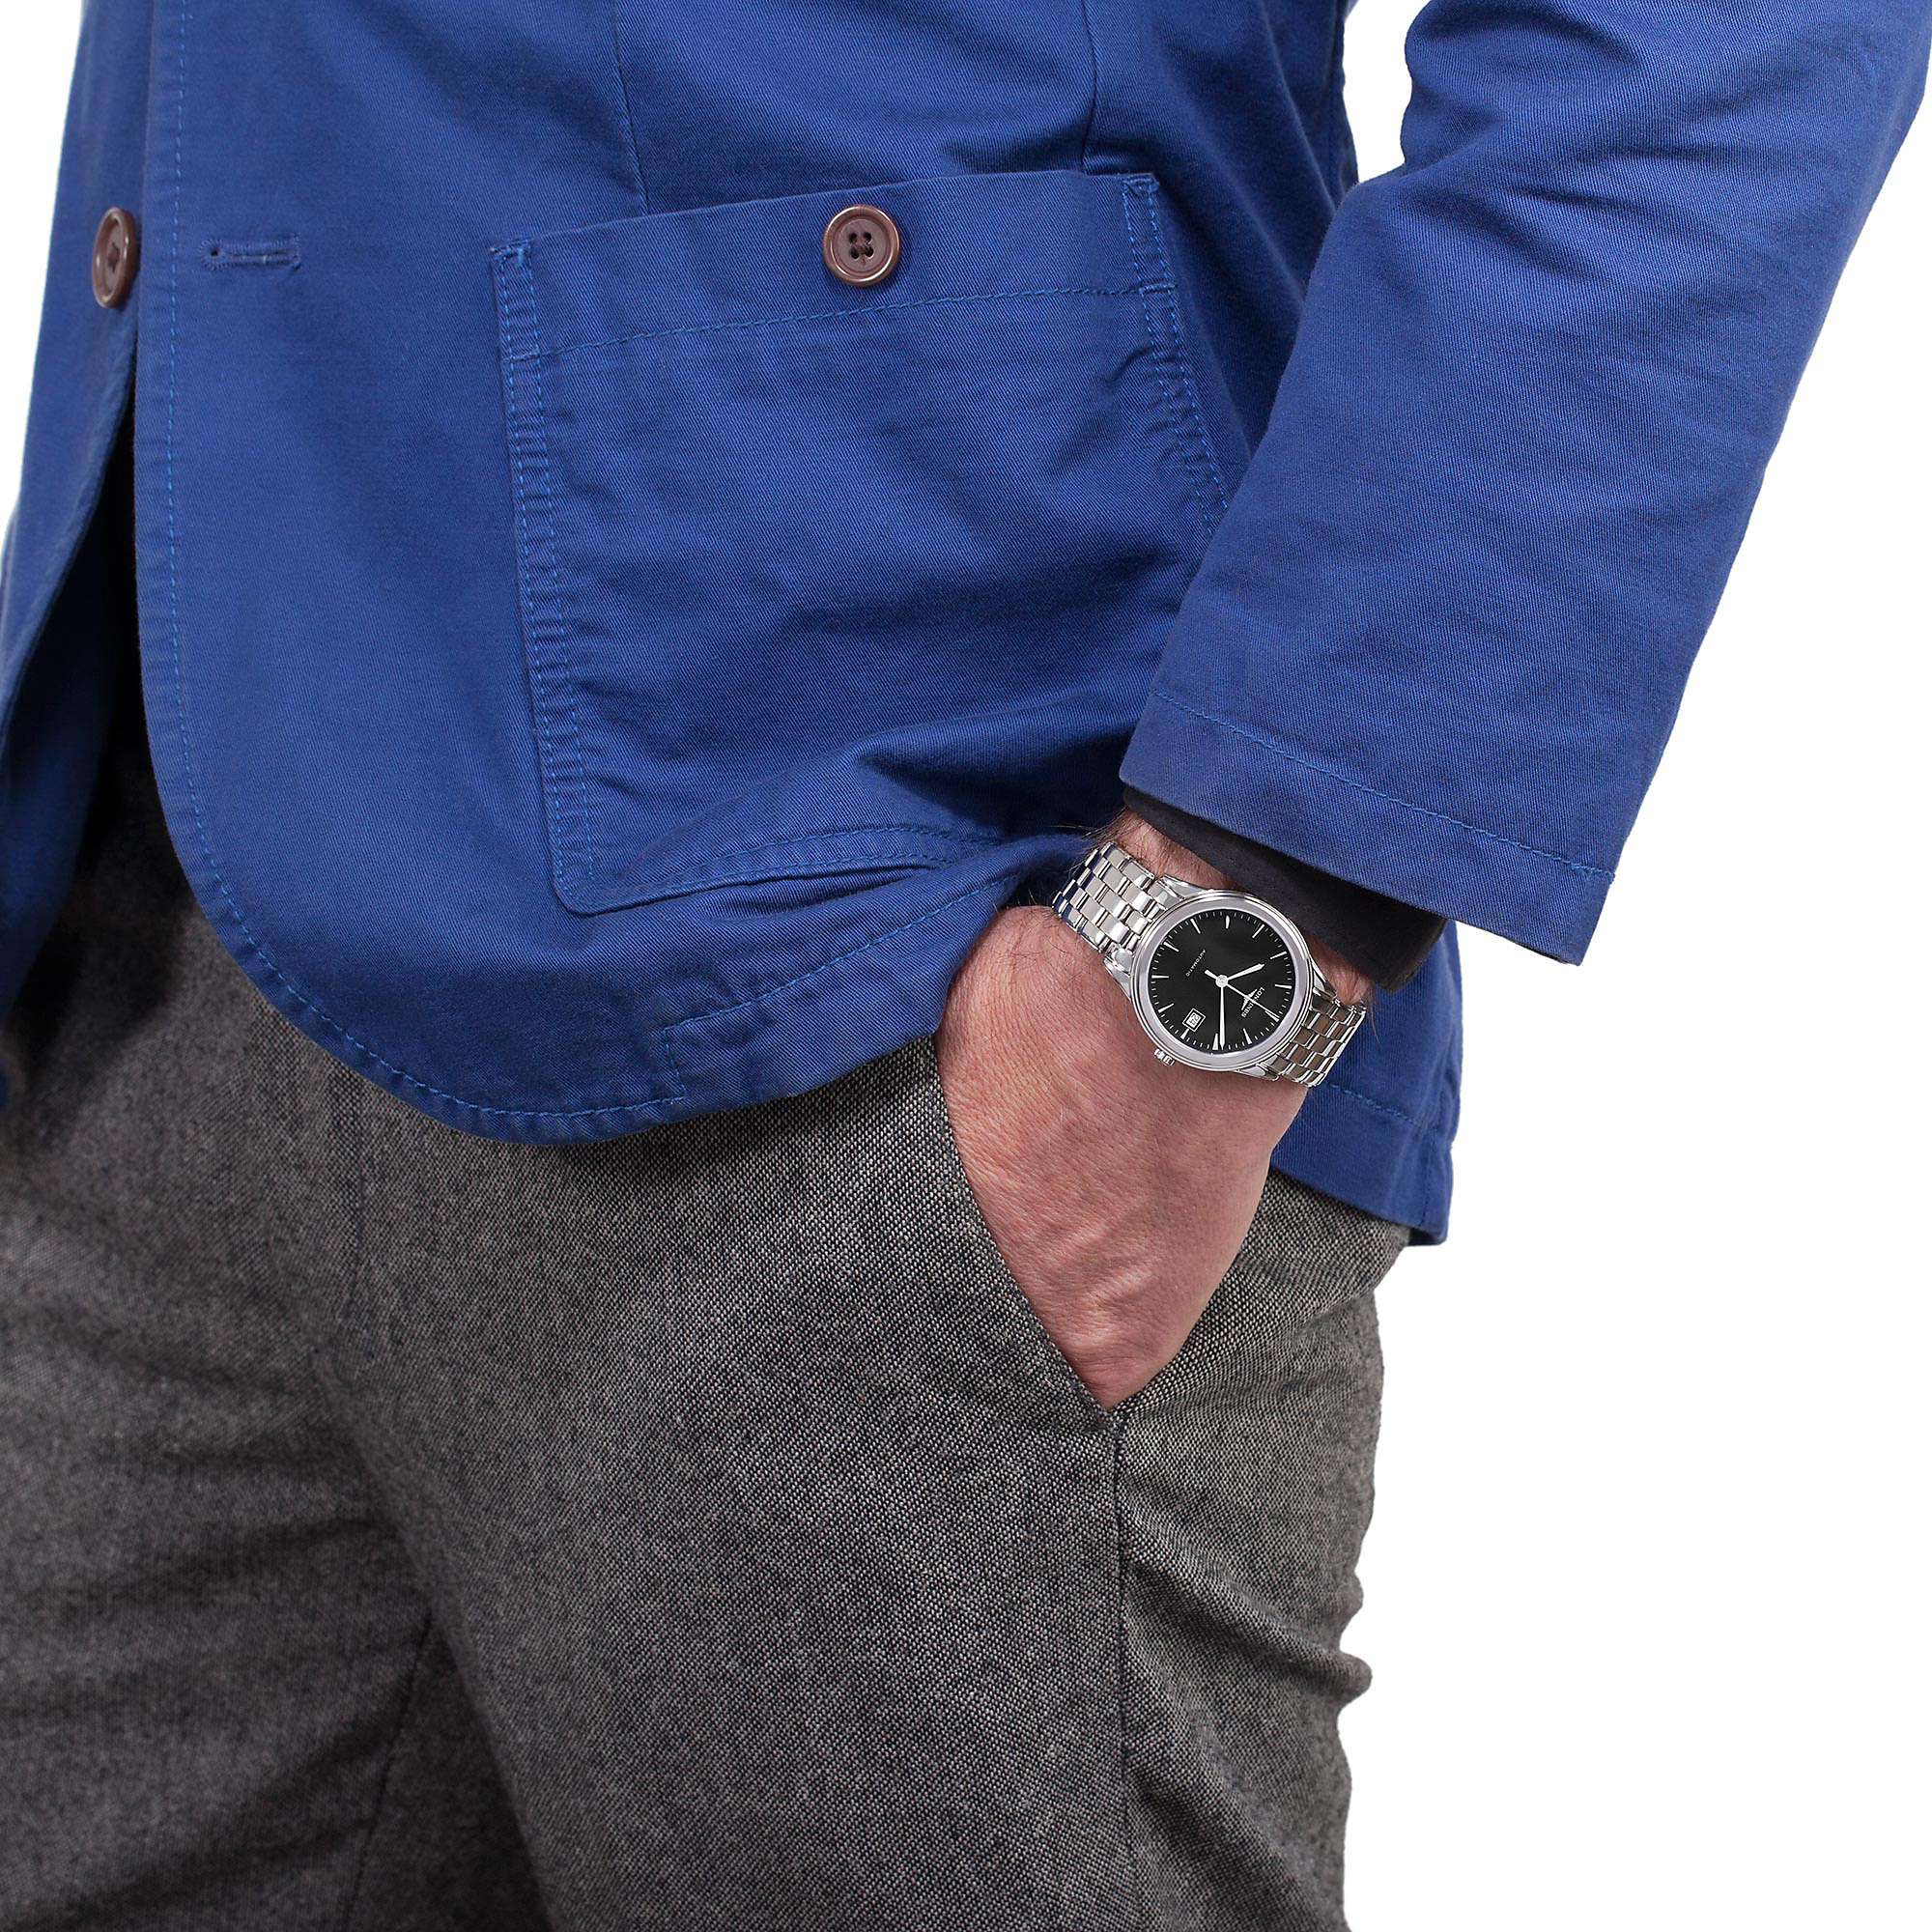 Buy Longines L48744526 Men's Flagship Automatic Date Bracelet Strap Watch, Silver/Black Online at johnlewis.com